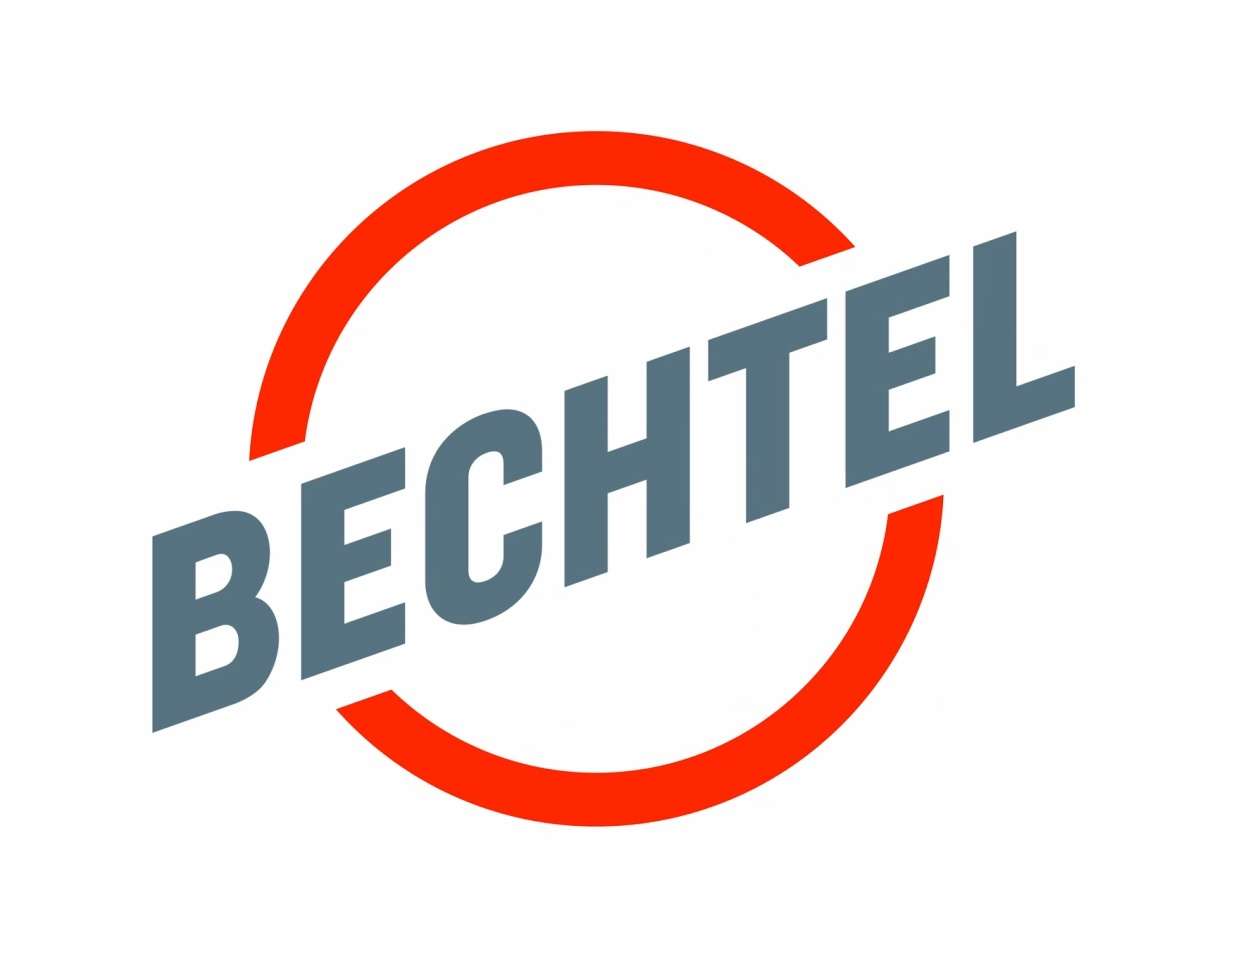 Bechtel corporation logo